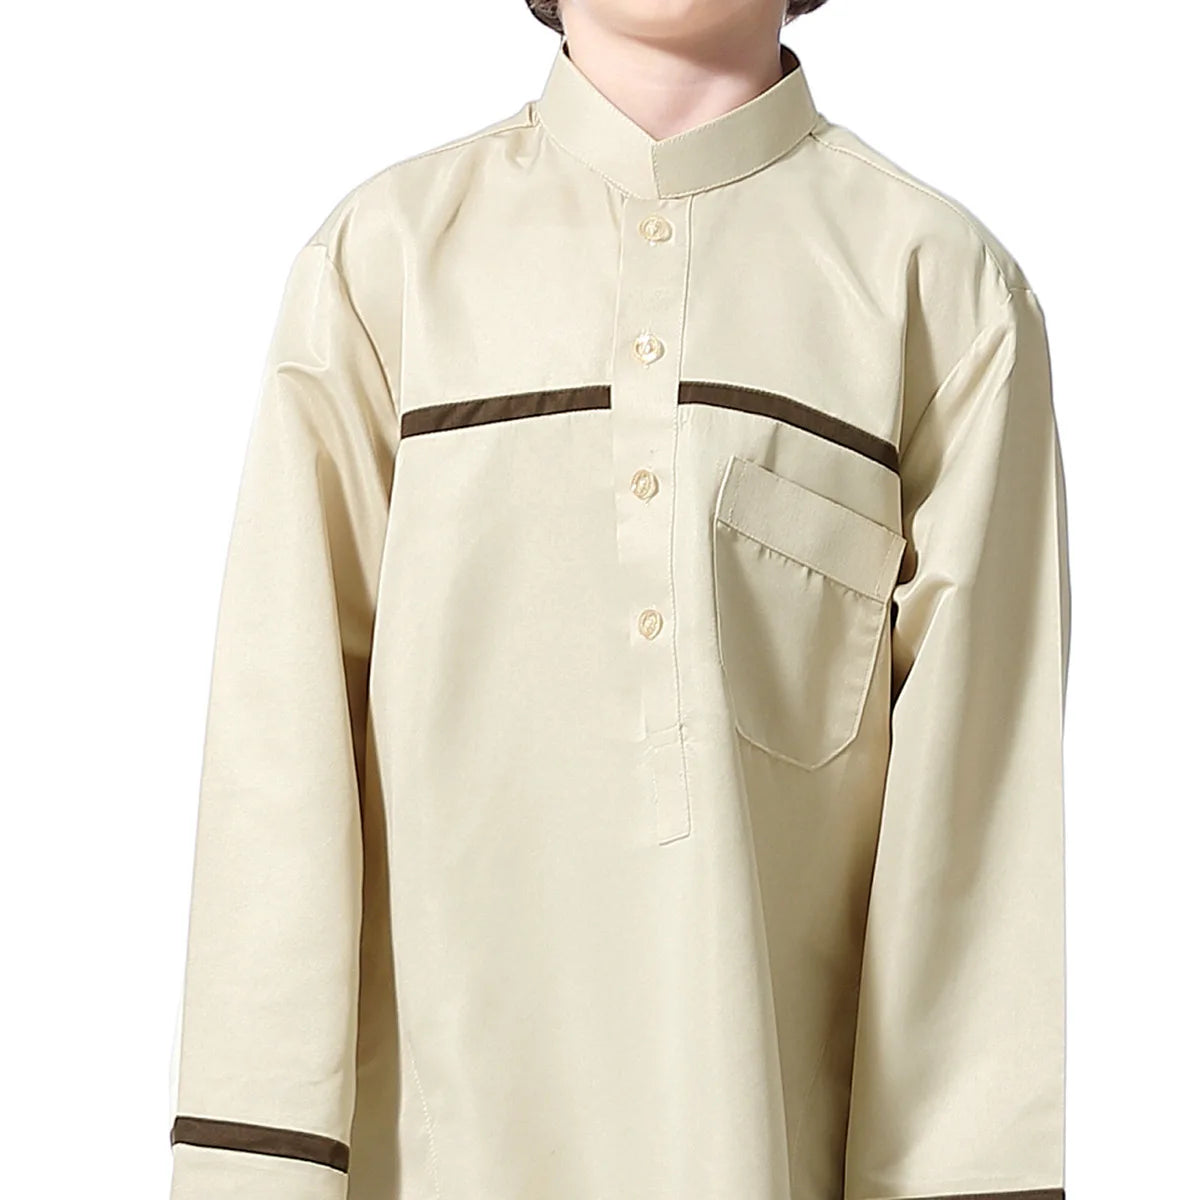 Chic Islamic Wear: Boys' Solid Collar Abaya Dress.